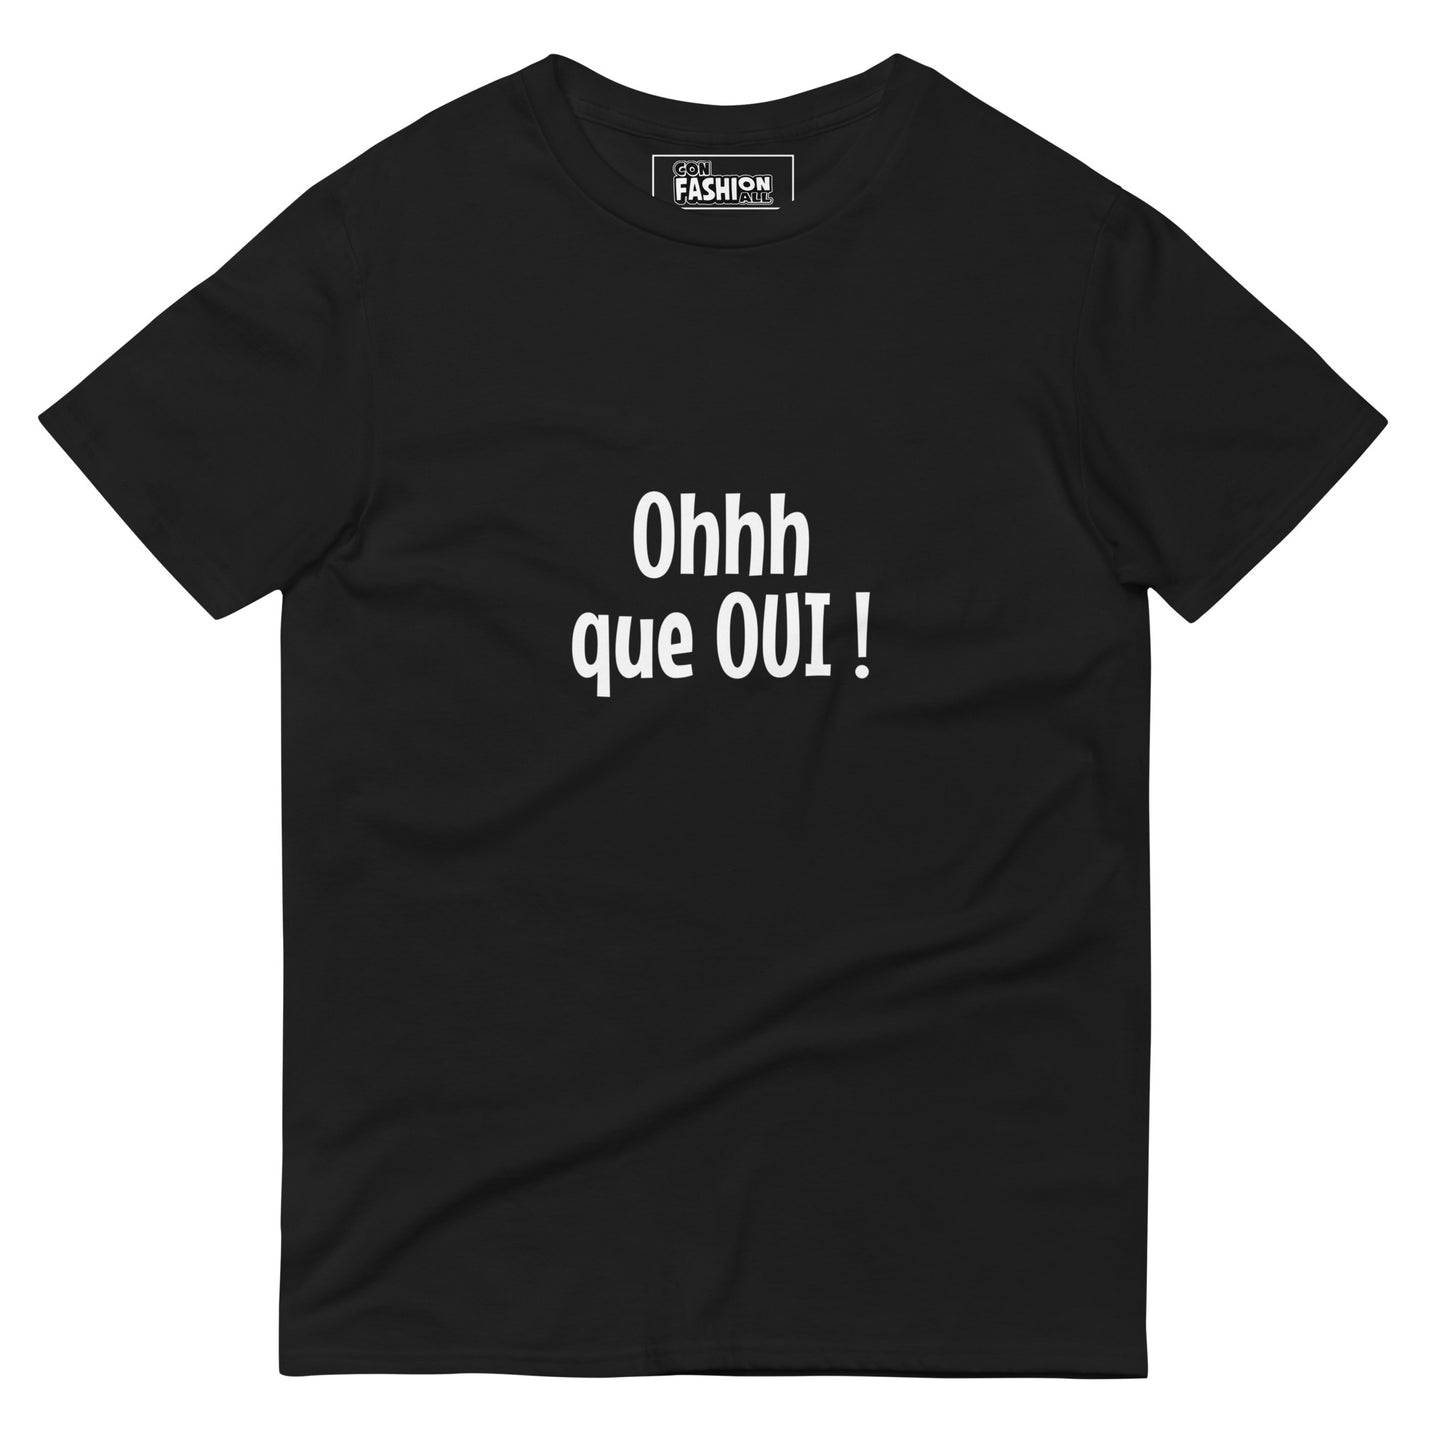 Ohhh que oui - Men's T-Shirt